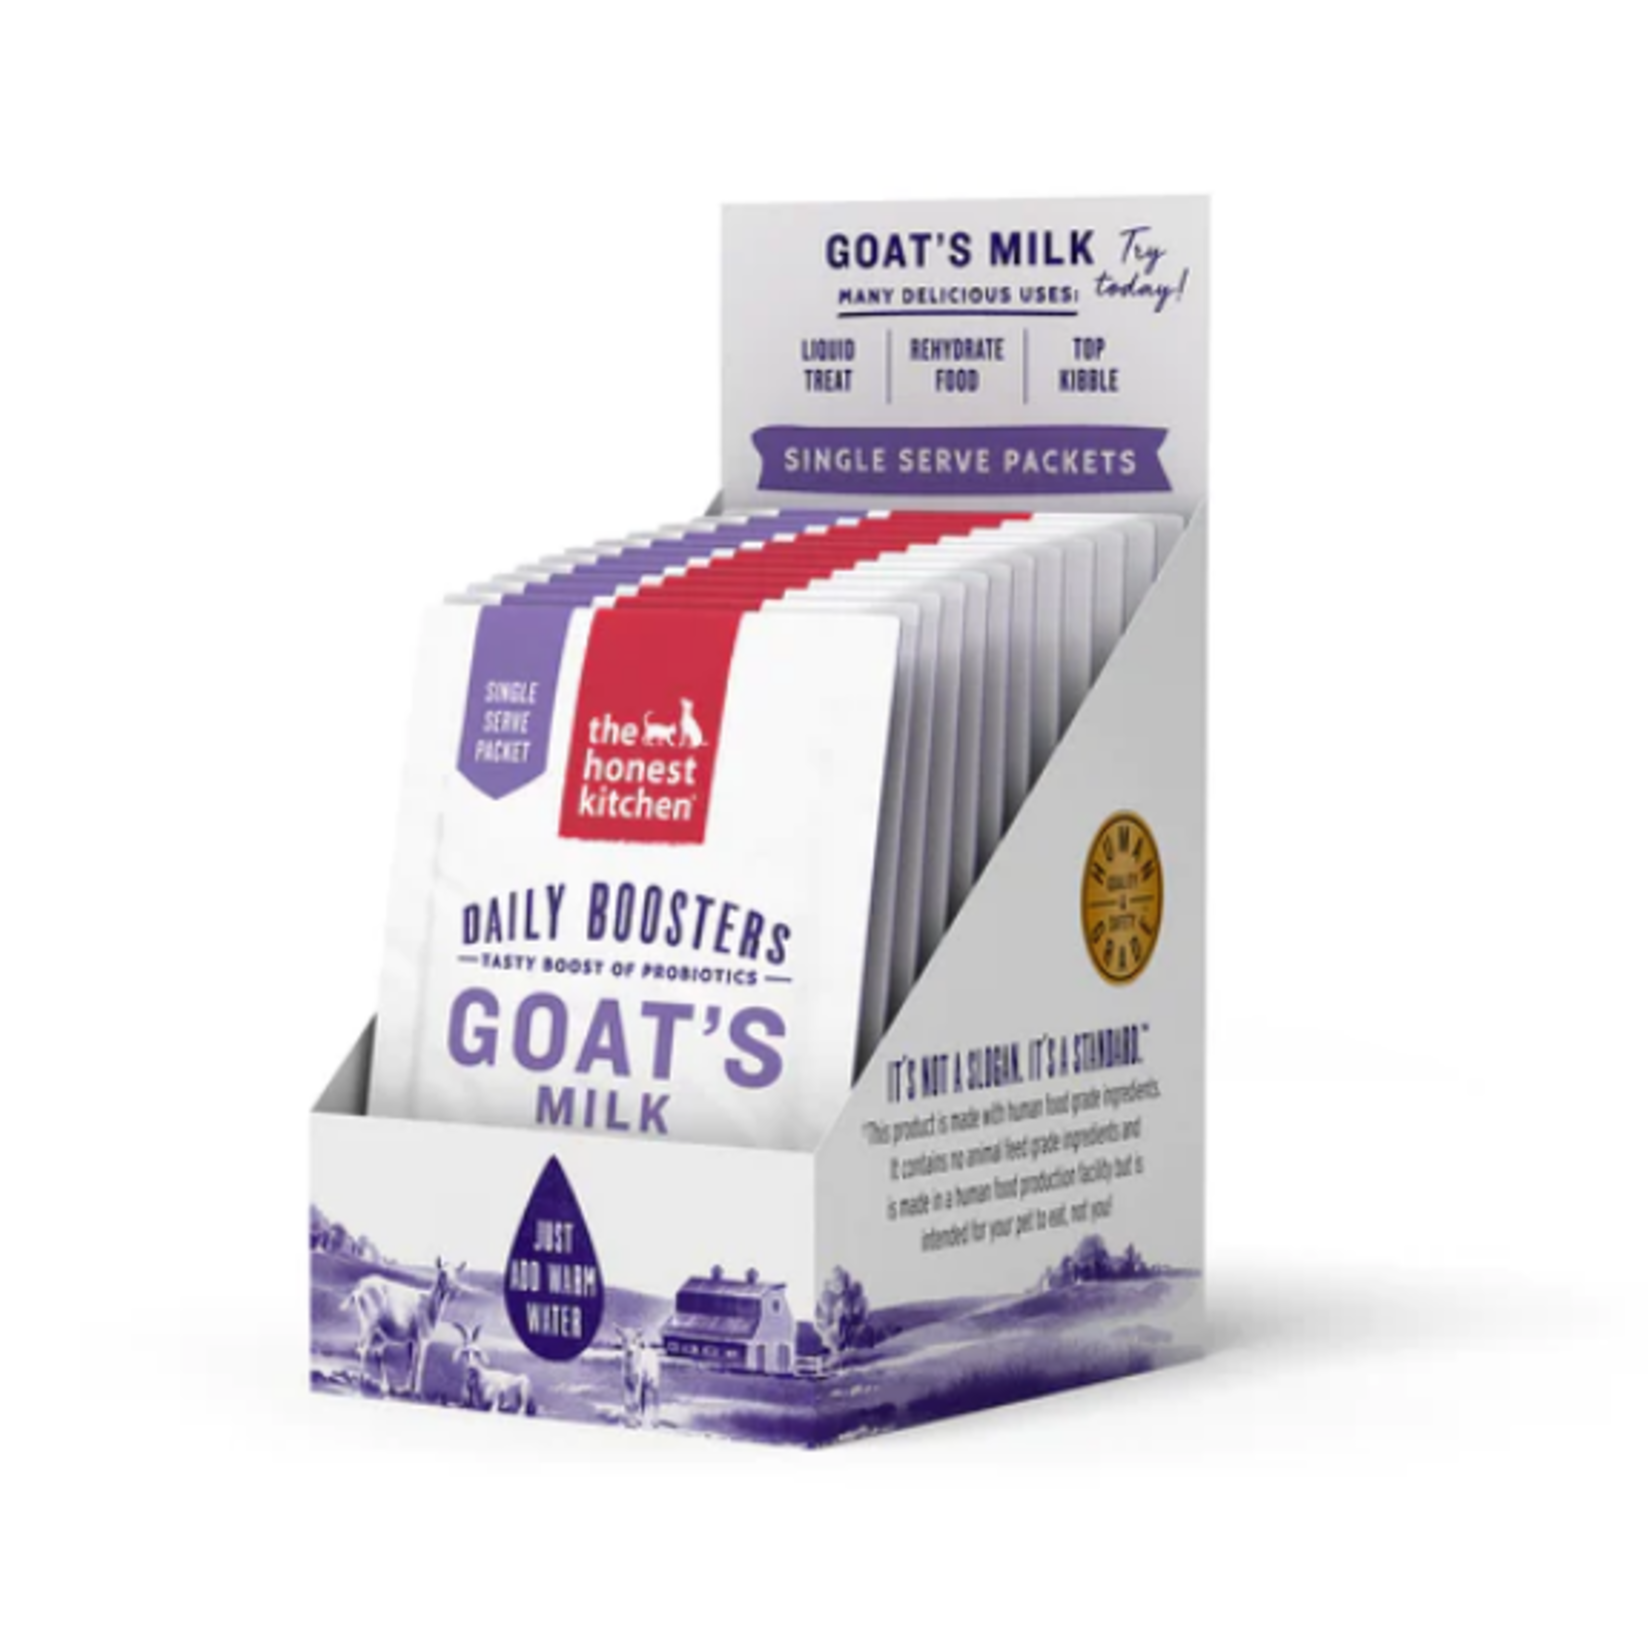 The Honest Kitchen Honest Kitchen Daily Boosters Goat's Milk Single Serve Pack 5g